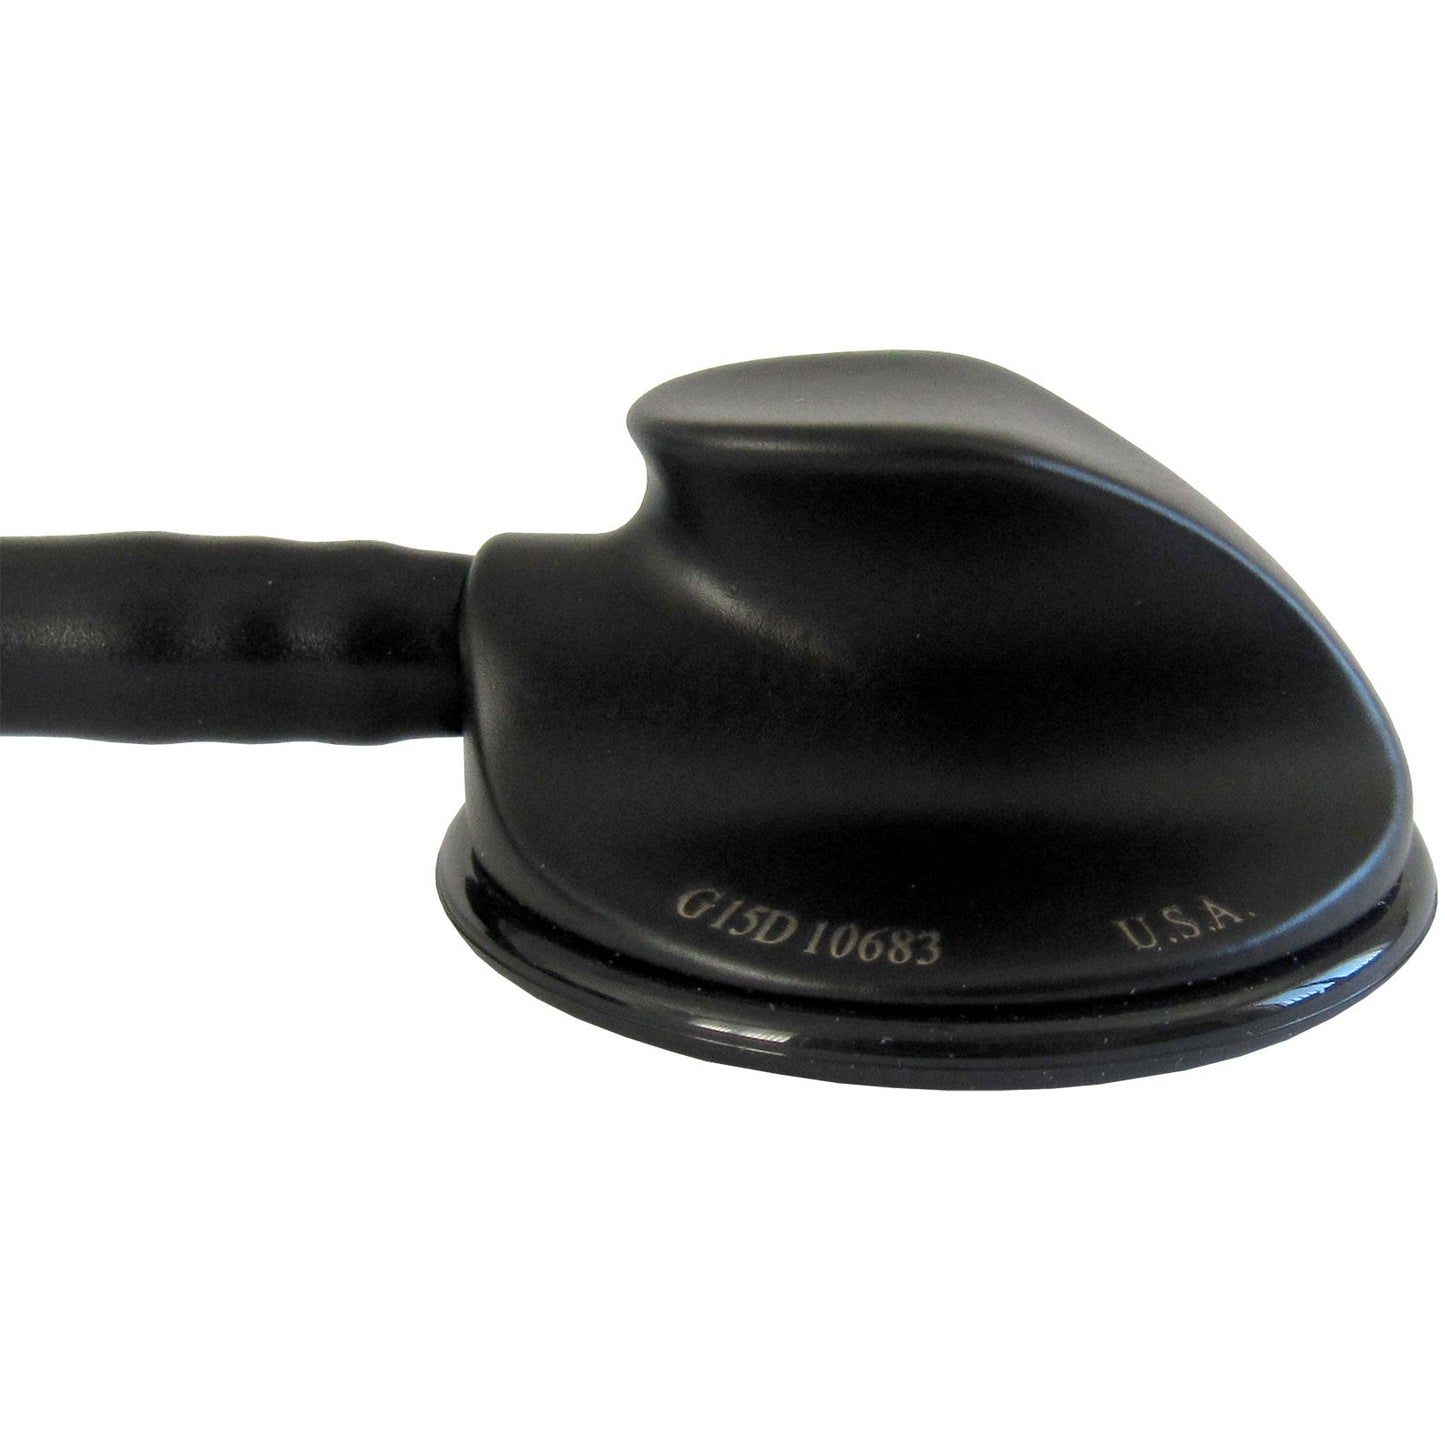 Littmann Master Classic II Stethoscope: All Black 2141 3M Littmann